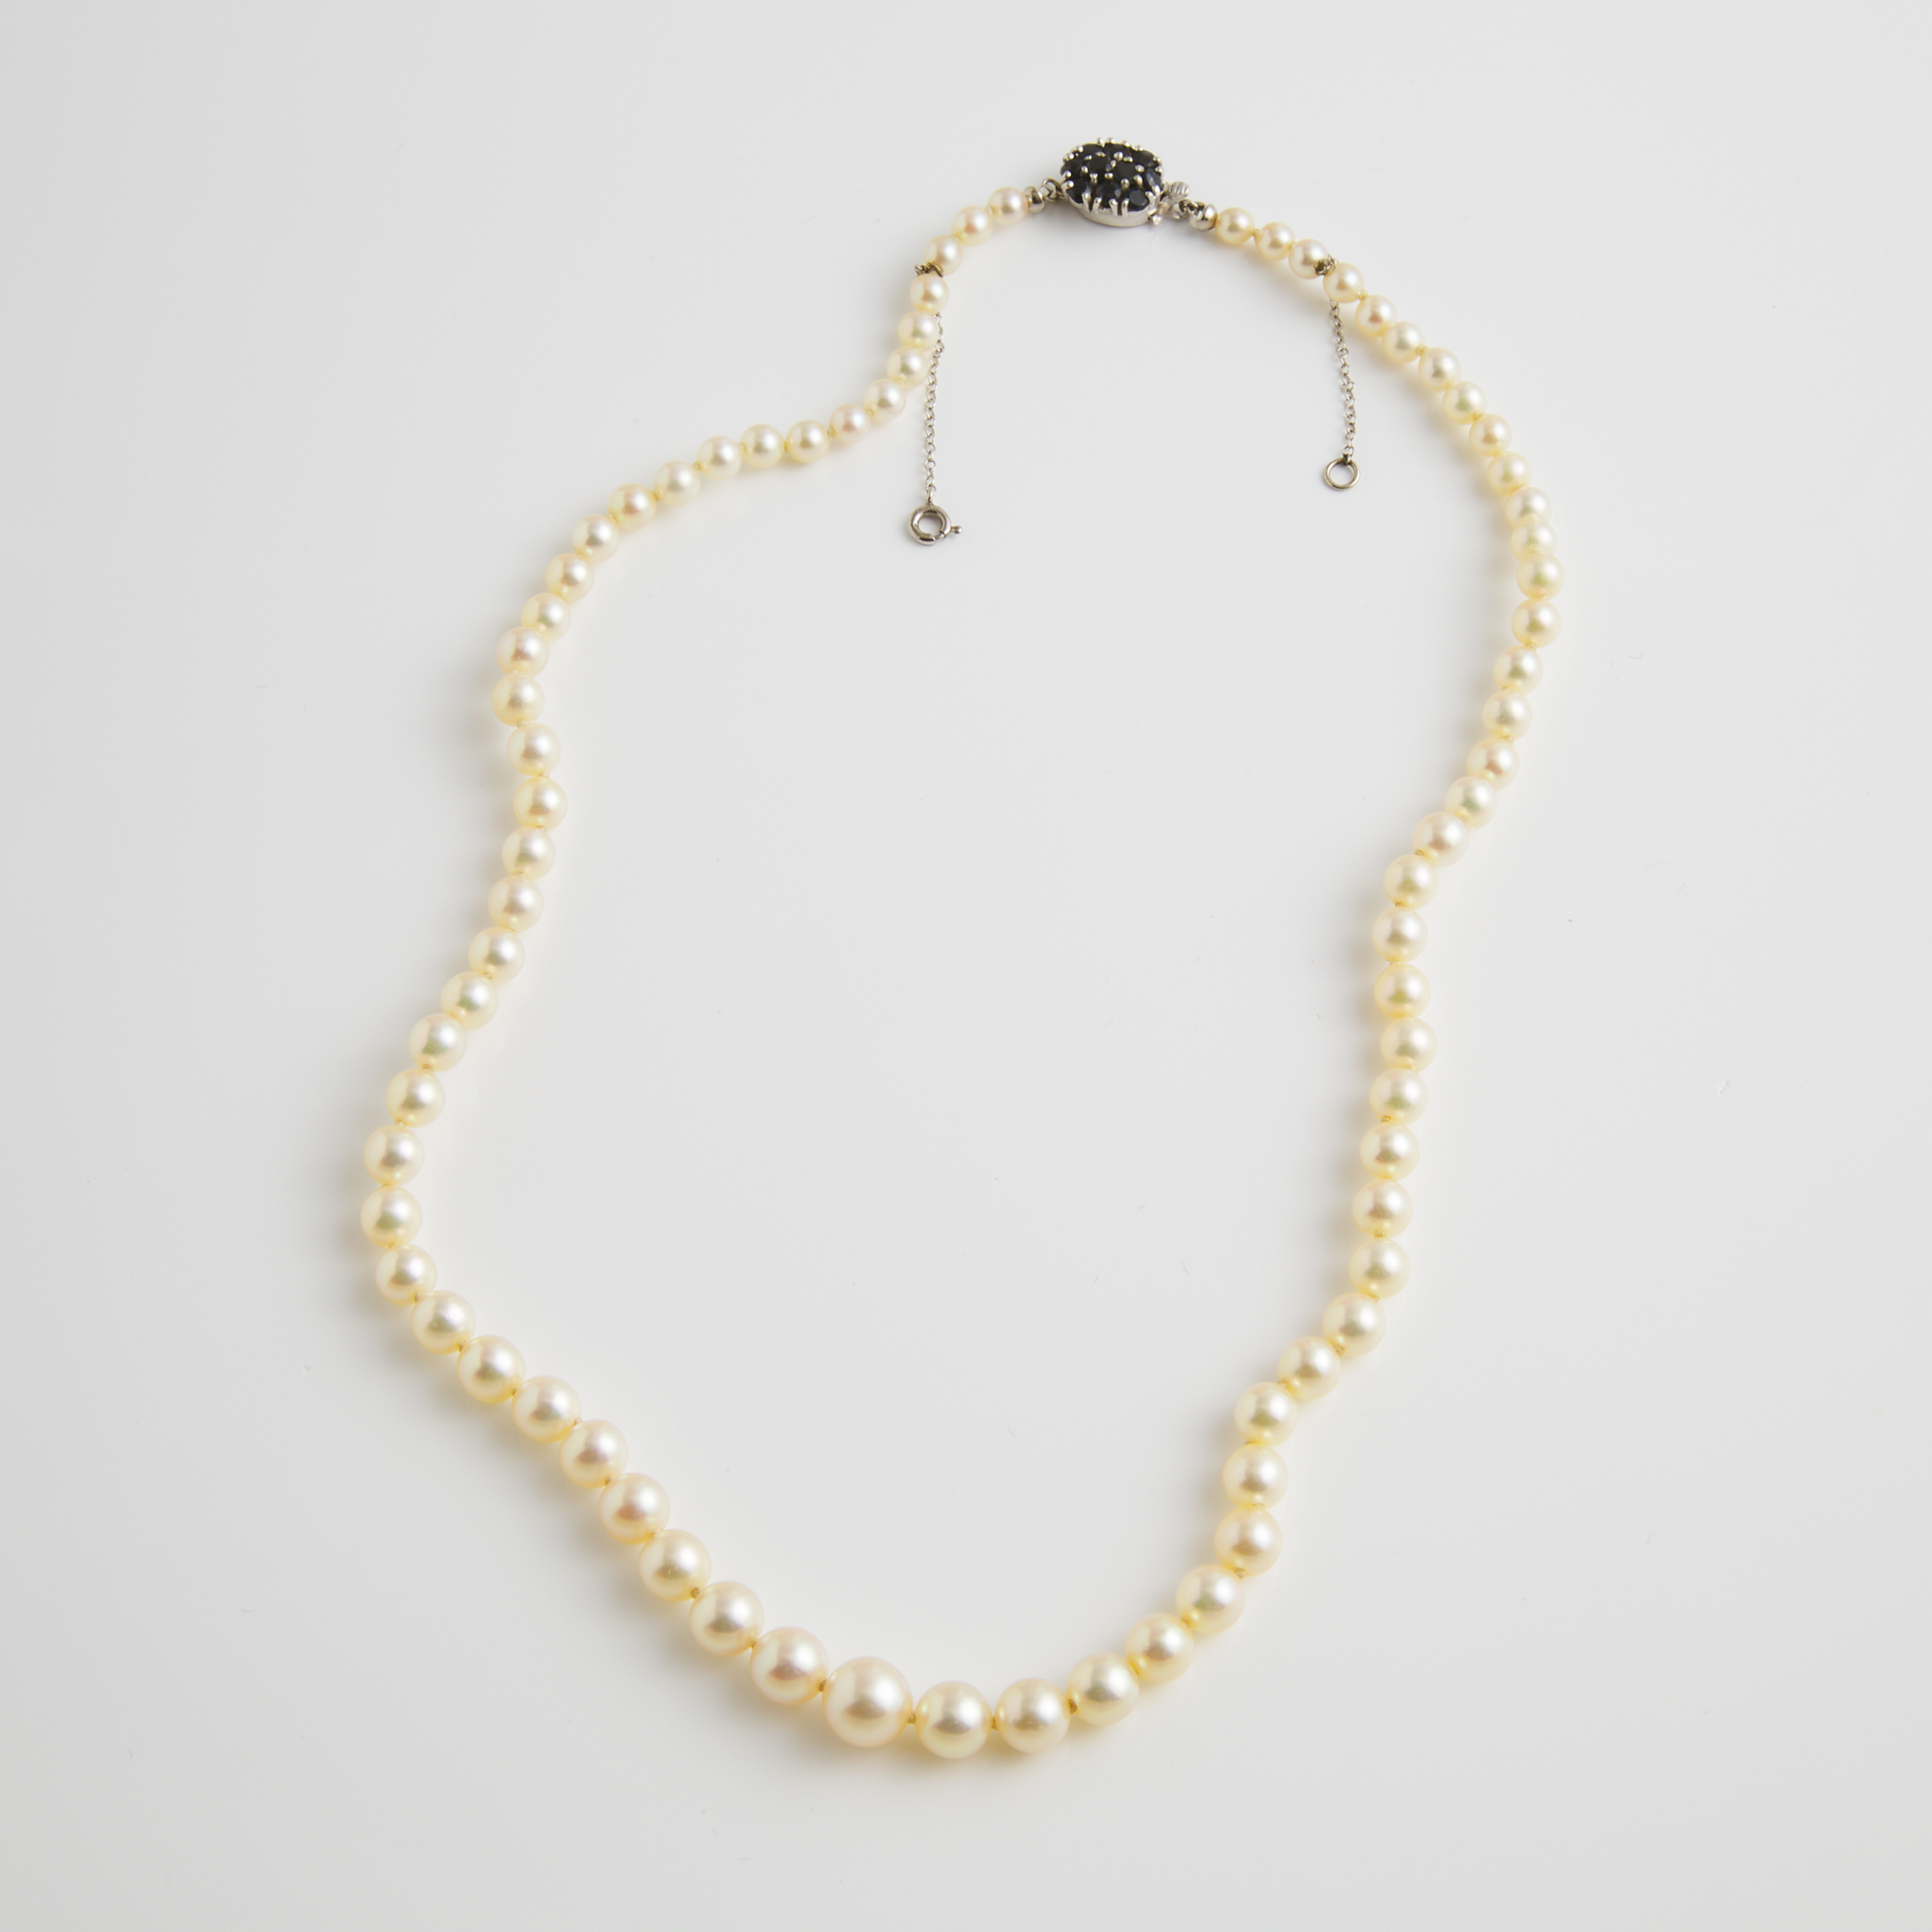 Birks Single Strand Graduated Cultured Pearl Necklace